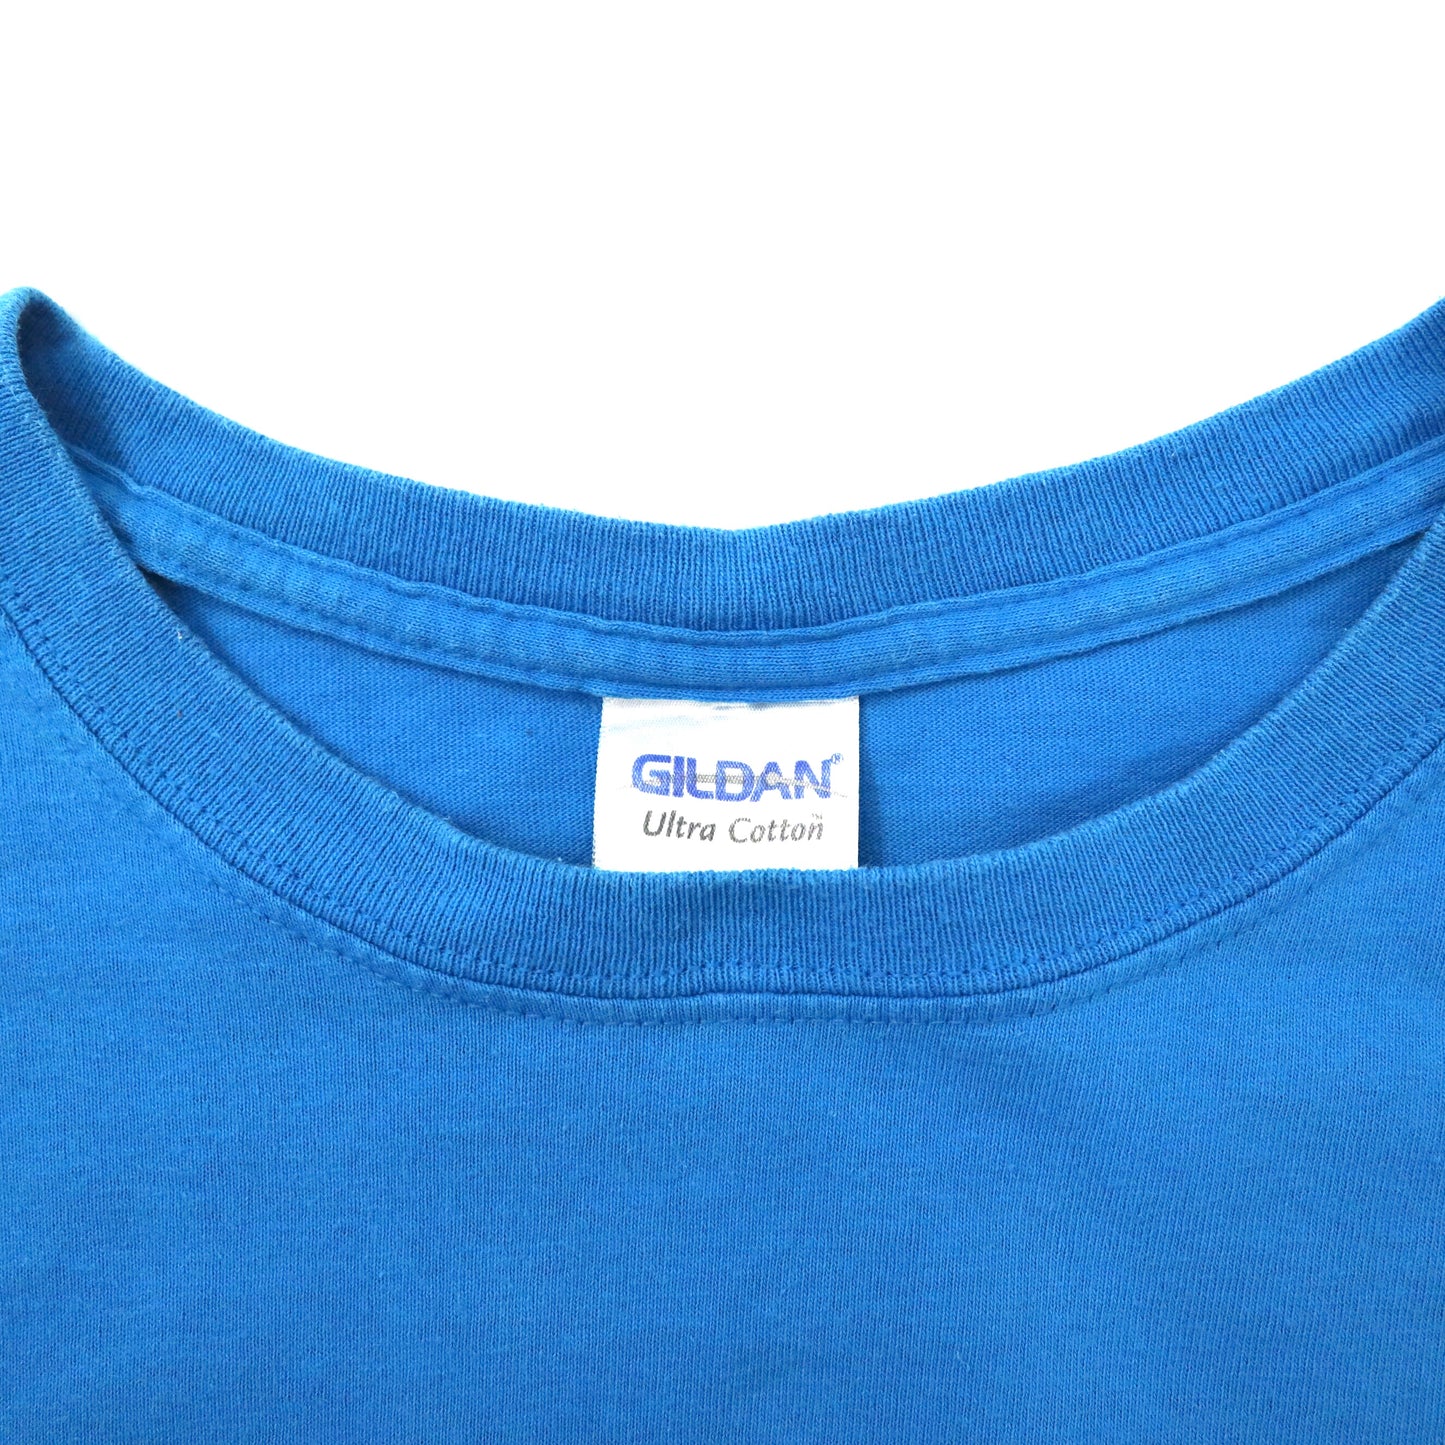 GILDAN ビッグサイズ プリントTシャツ XL ブルー コットン バックプリント Grace Church